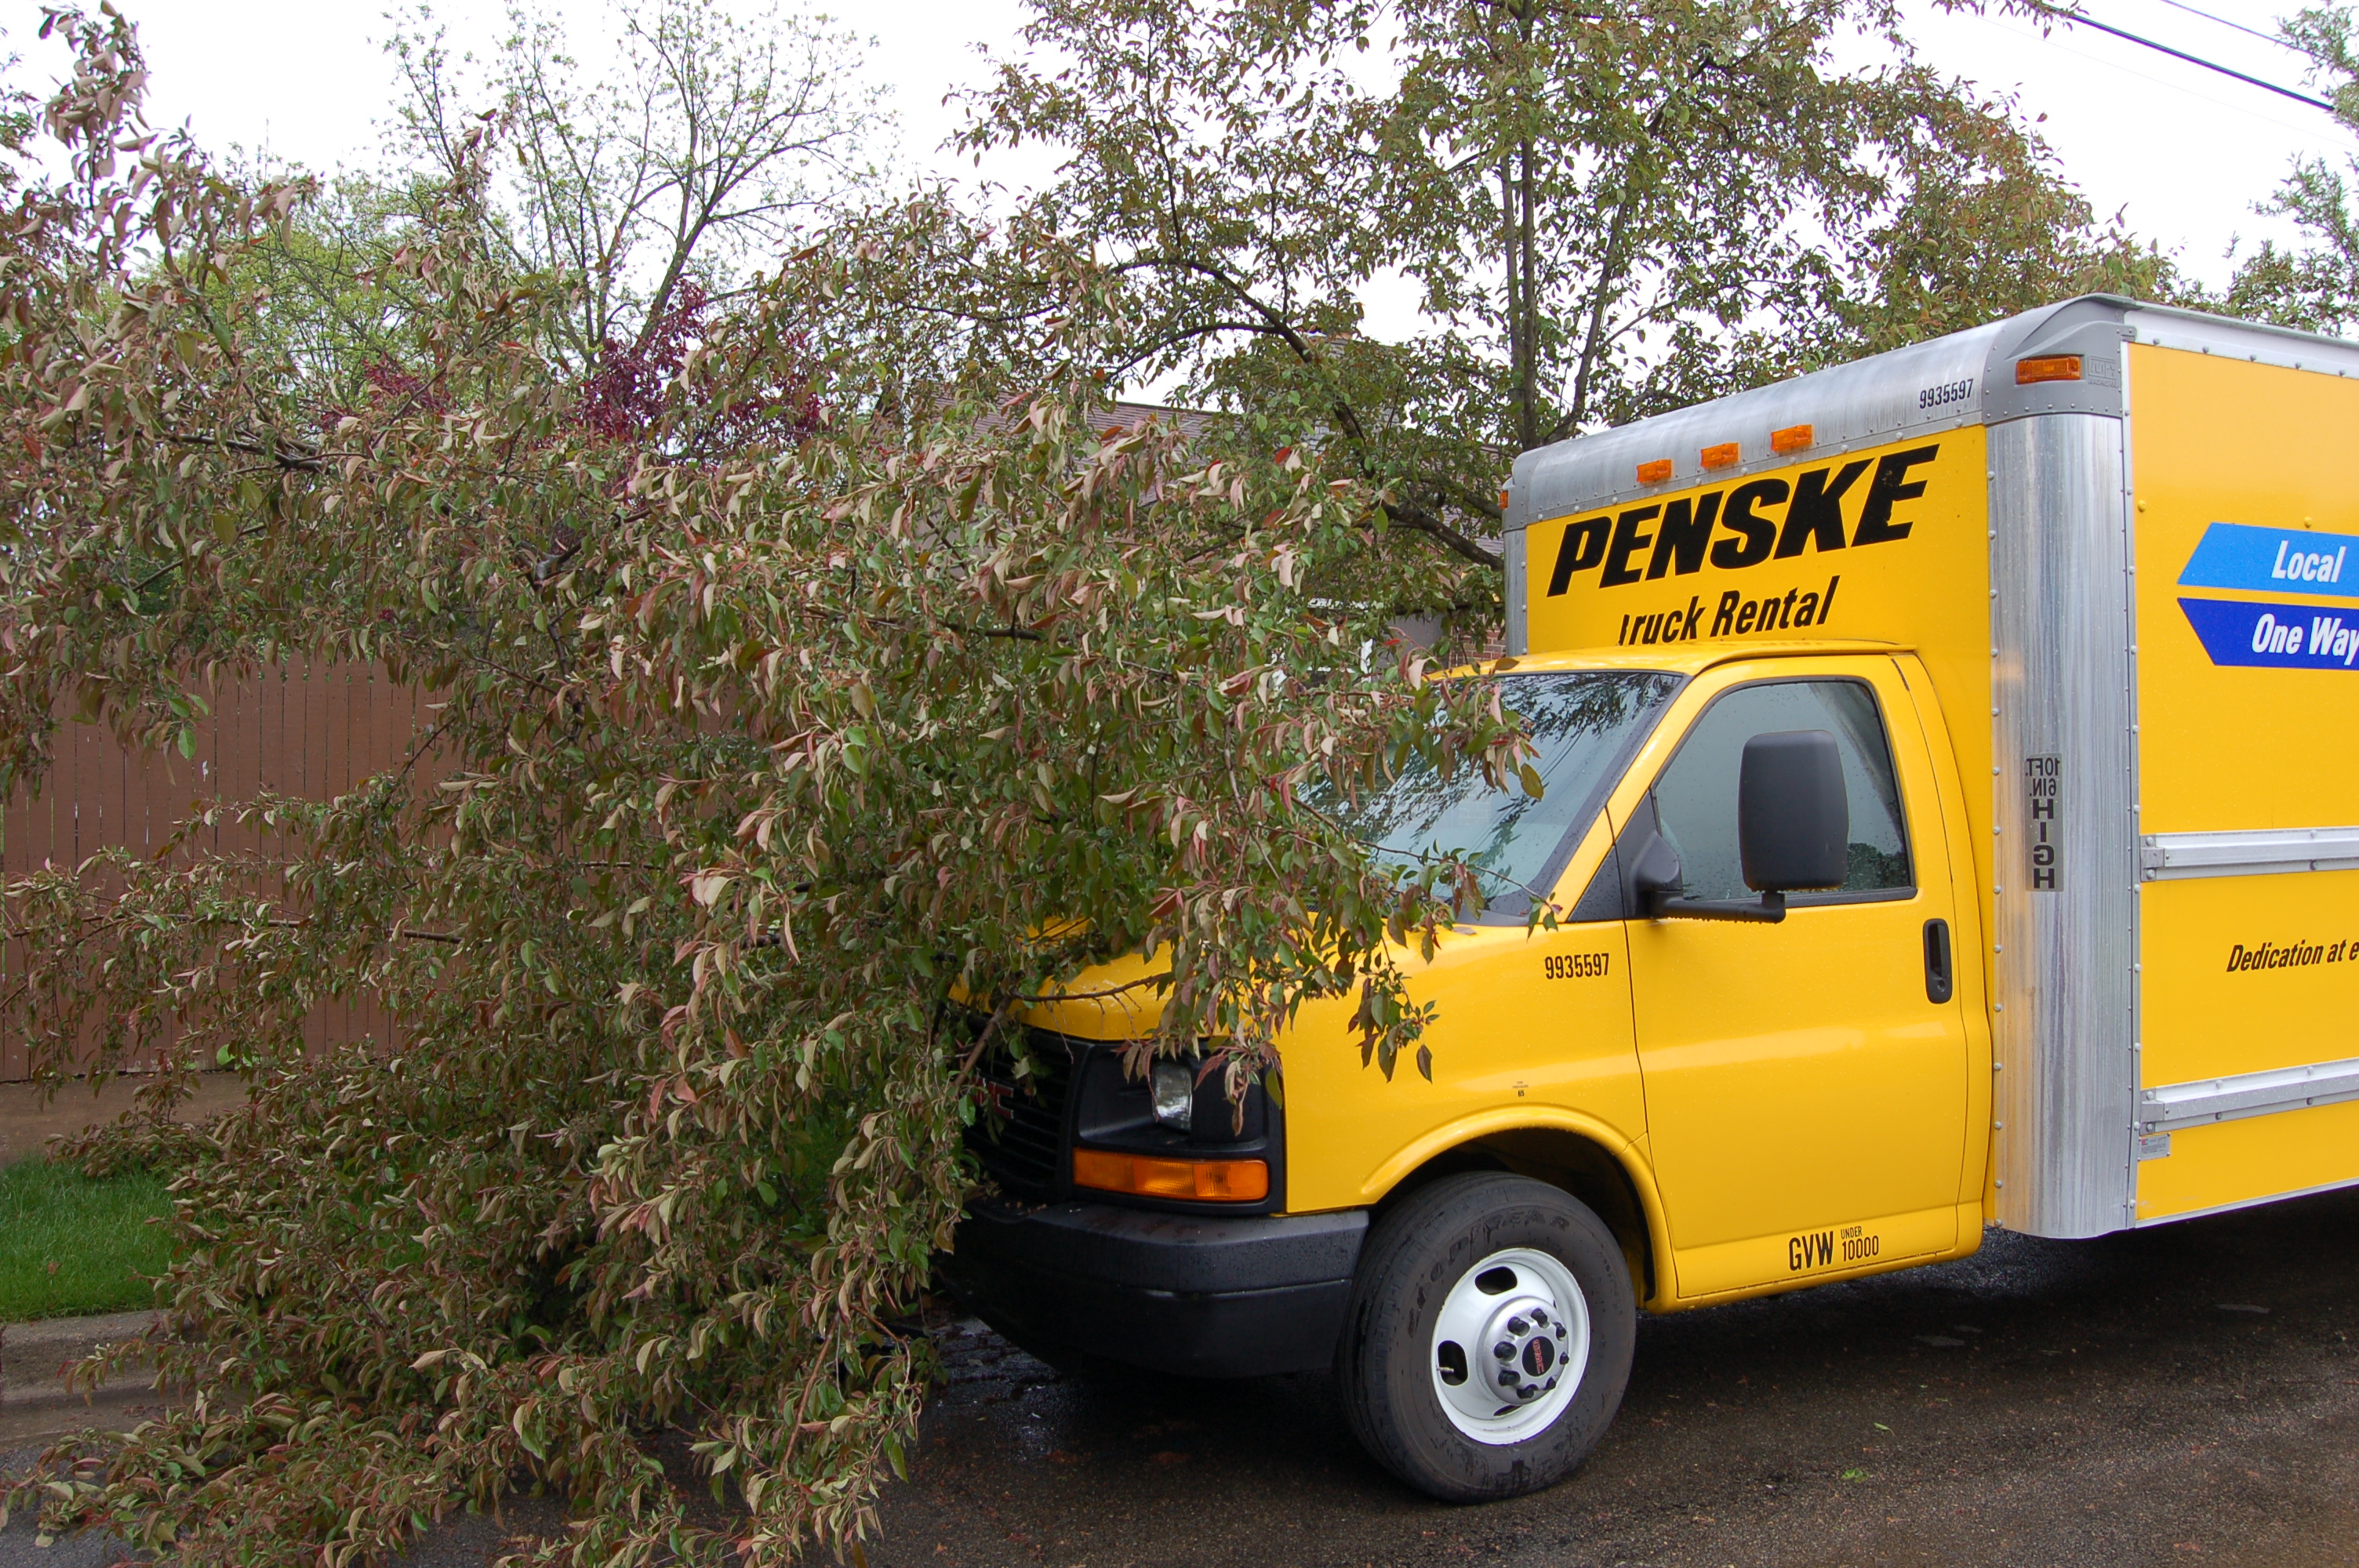 05-21-08  Response - Tree On Truck